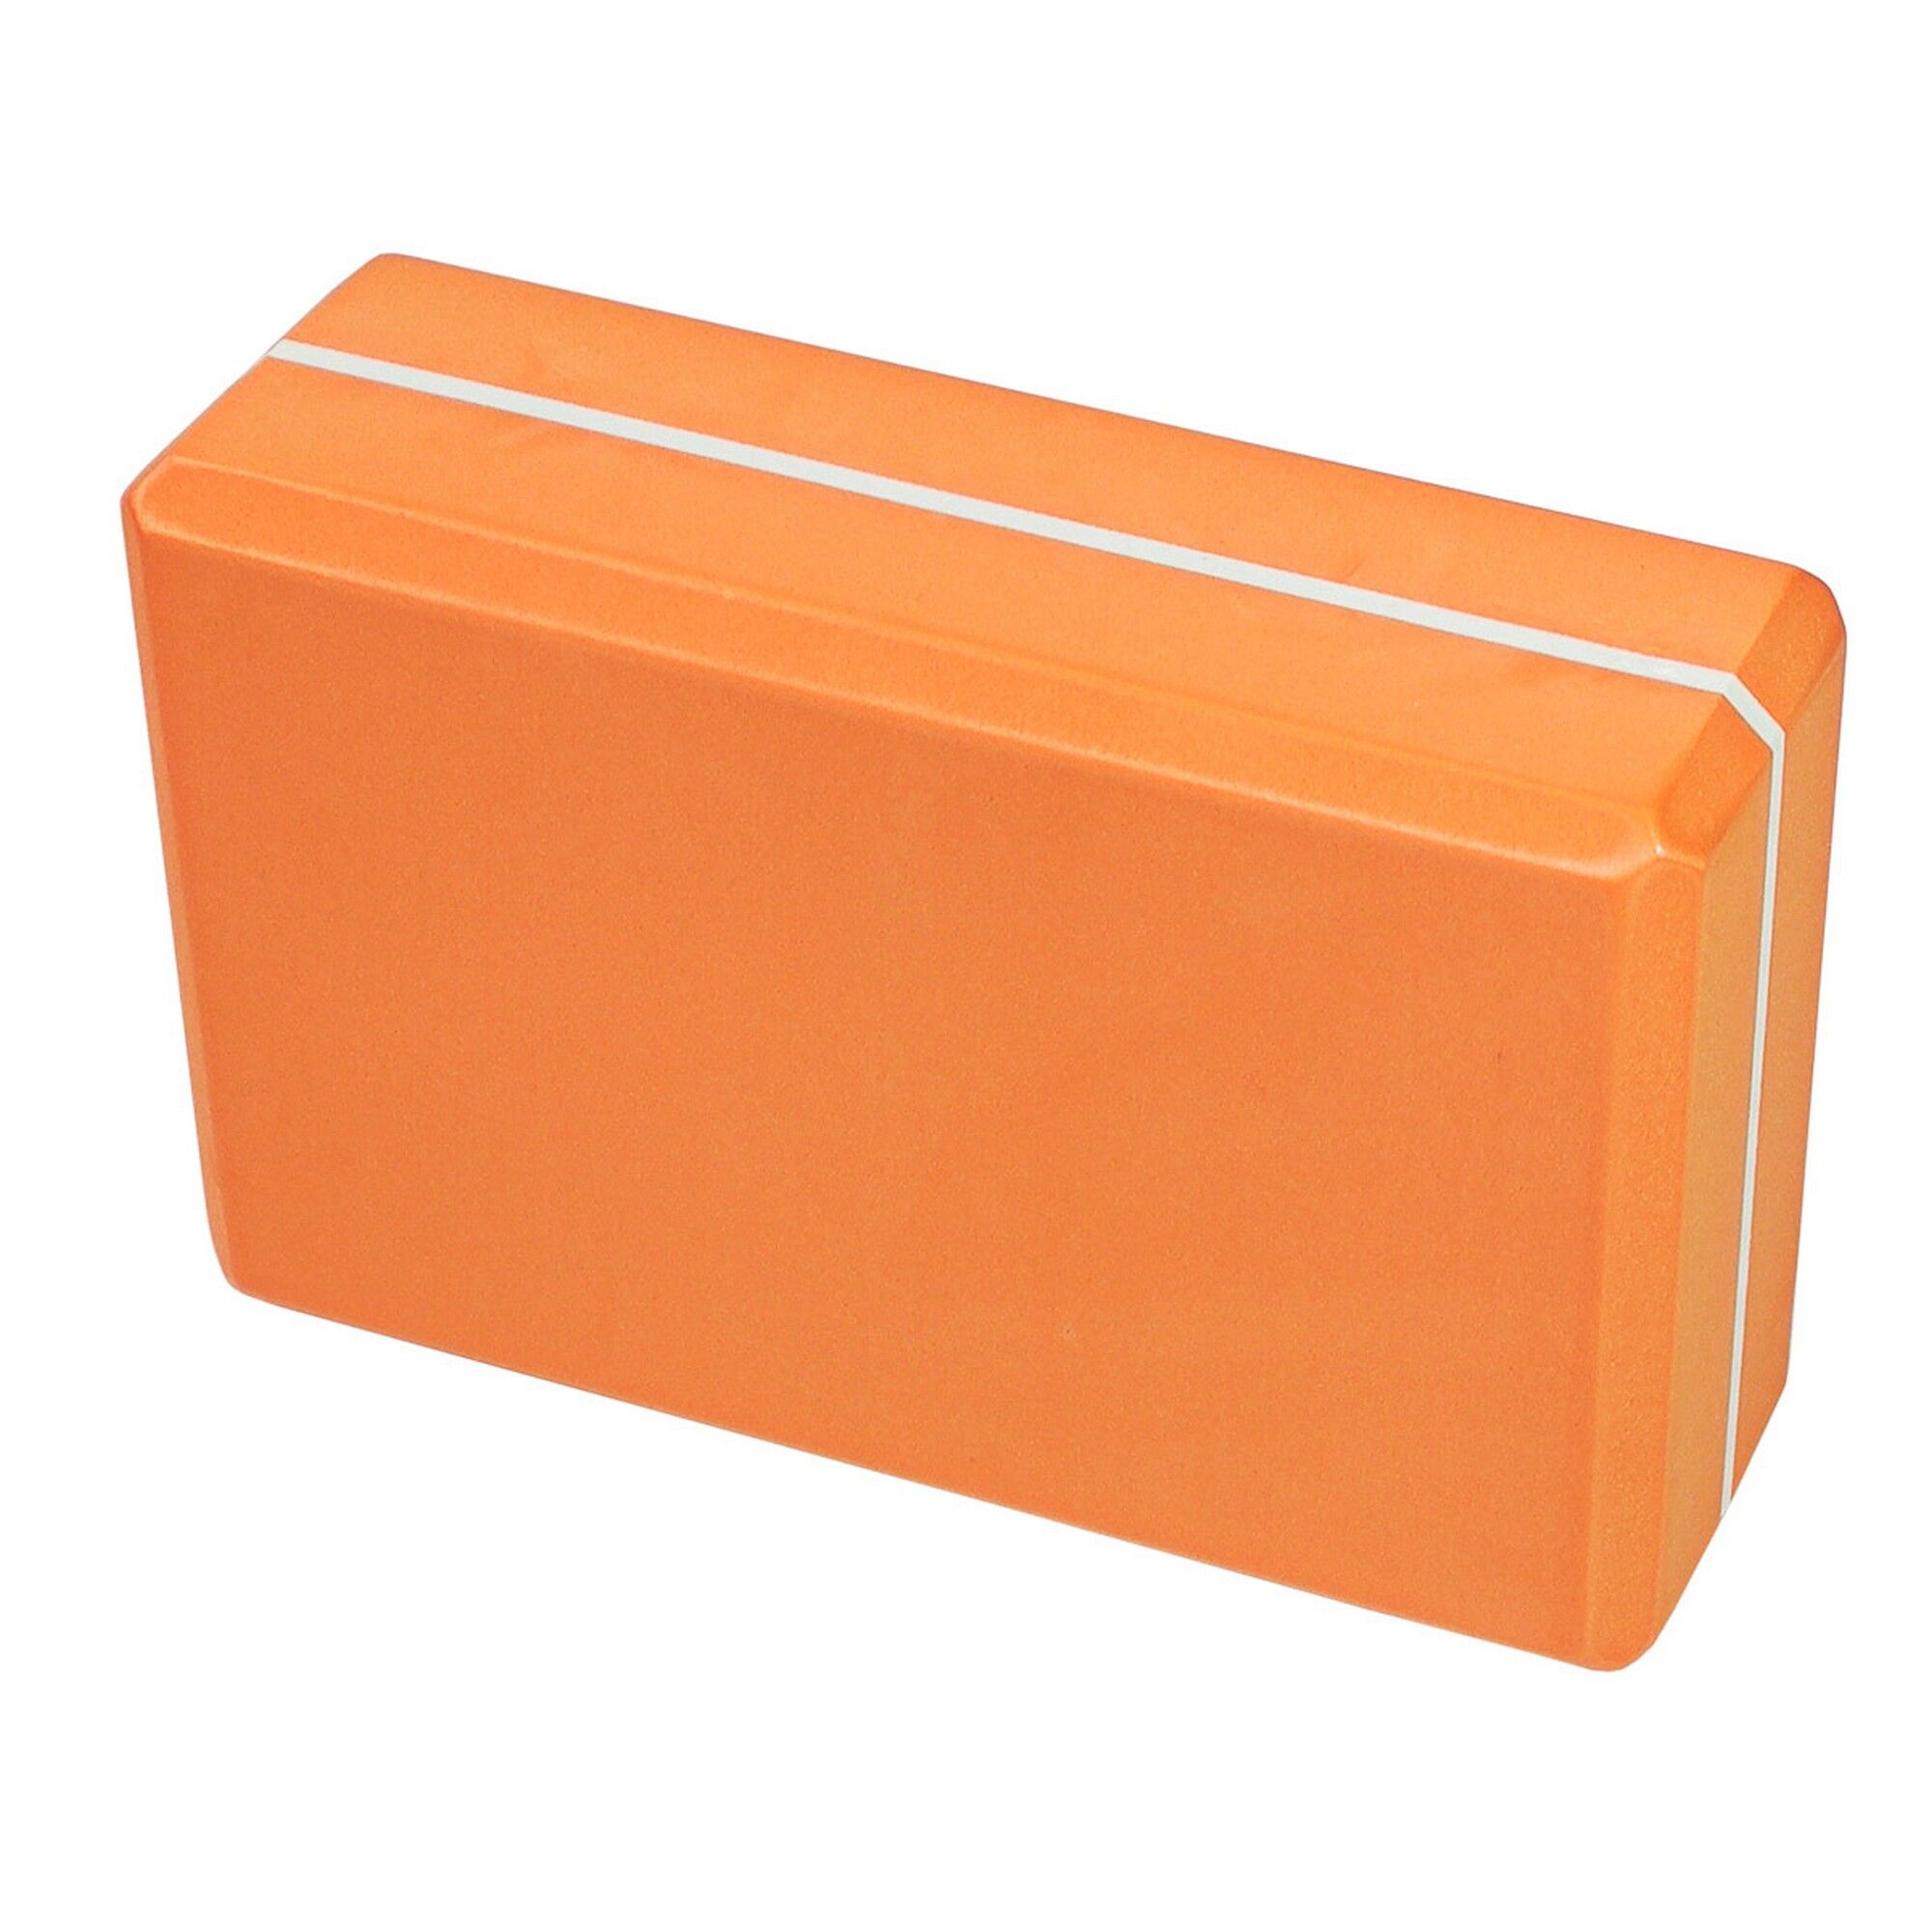 Йога блок полумягкий (оранжевый) 223х150х76мм., из вспененного ЭВА E39131-16 ST